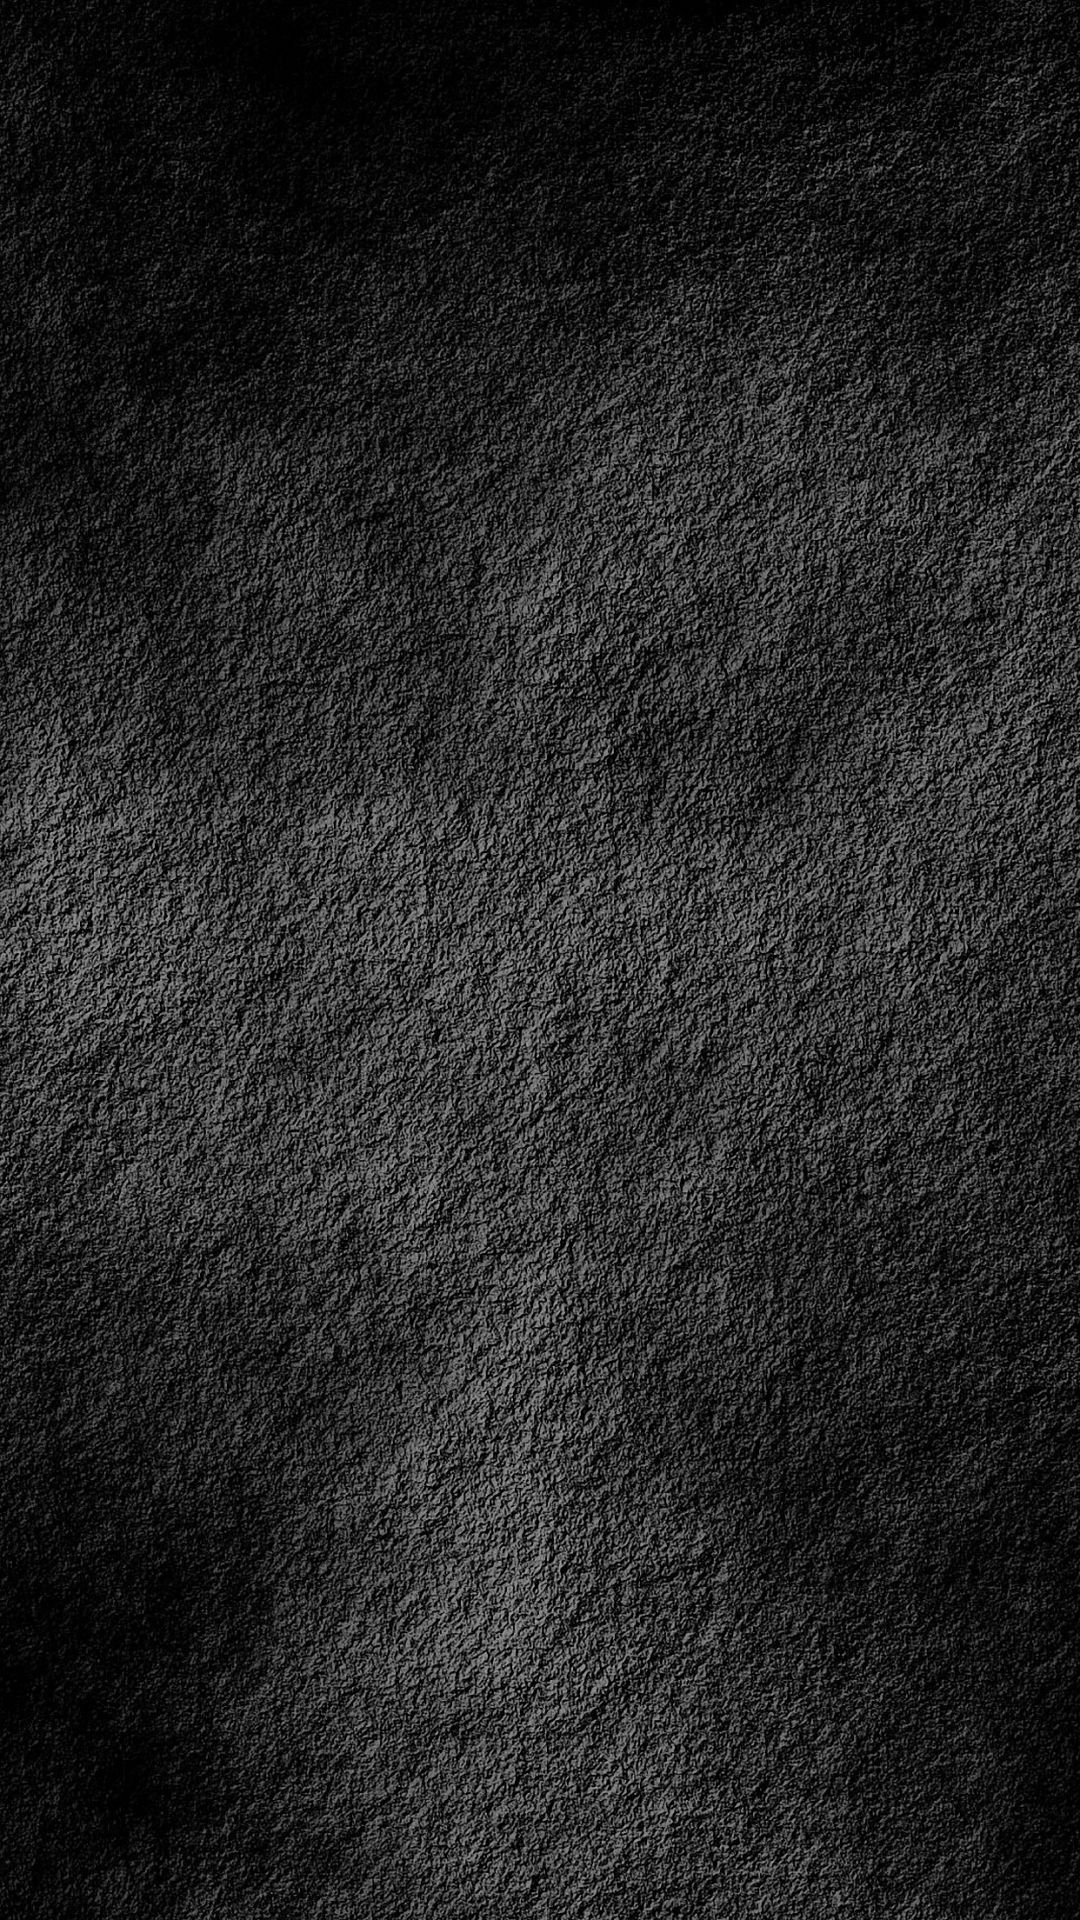 AR7 on Twitter wallpapers Gradient Space Grey wallpaper for   iPhone11ProMax  iPhone11Pro  iPhone11  iPhoneXSMAX  iPhoneXR   iPhoneXS  iPhoneX  ALL other iPhone Download   httpstcoRHkSDAQCcv Prod AR72014 httpstco 